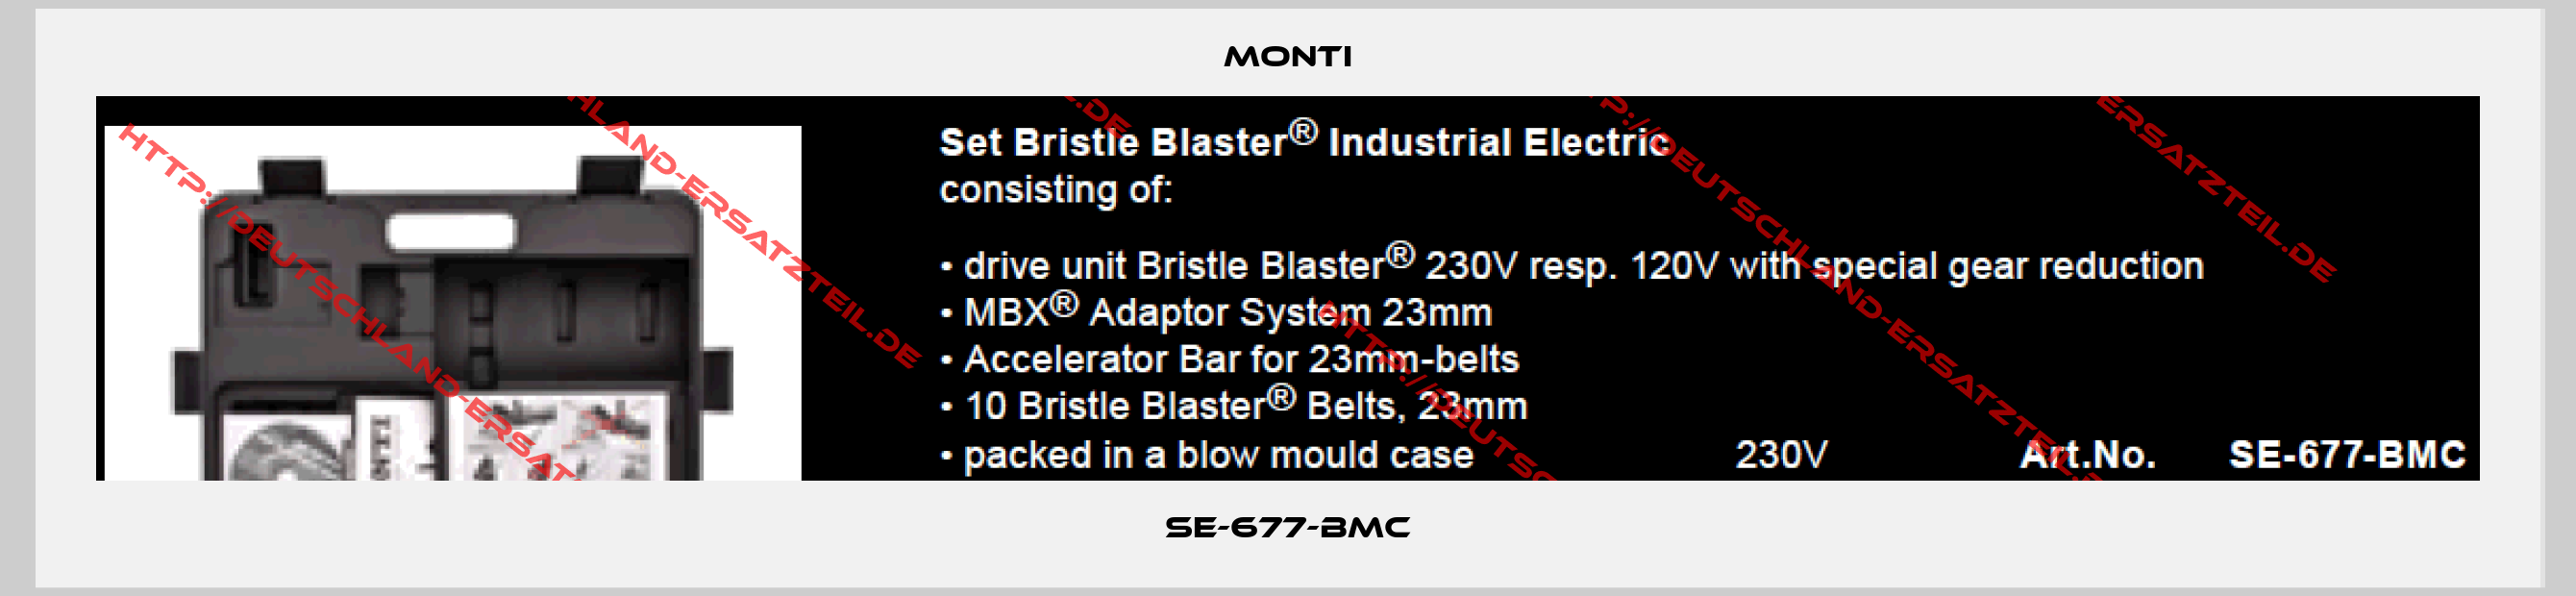 MONTI-SE-677-BMC